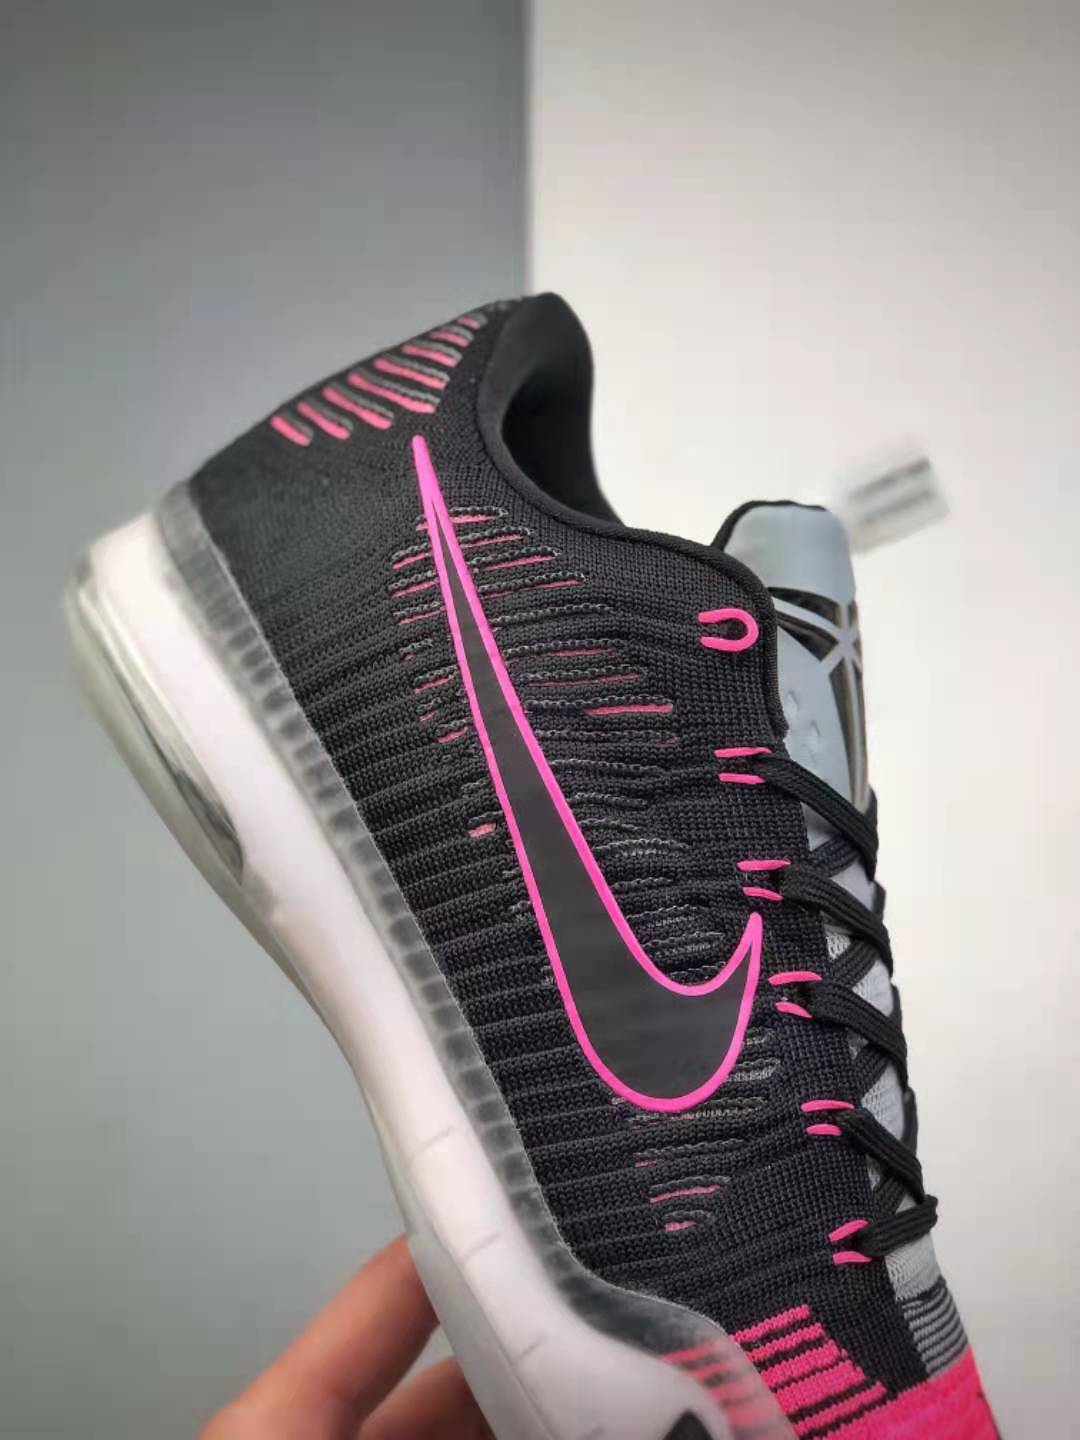 Nike Kobe X Elite Low Mambacurial - Black/Wolf Grey/Flash Pink 747212 010